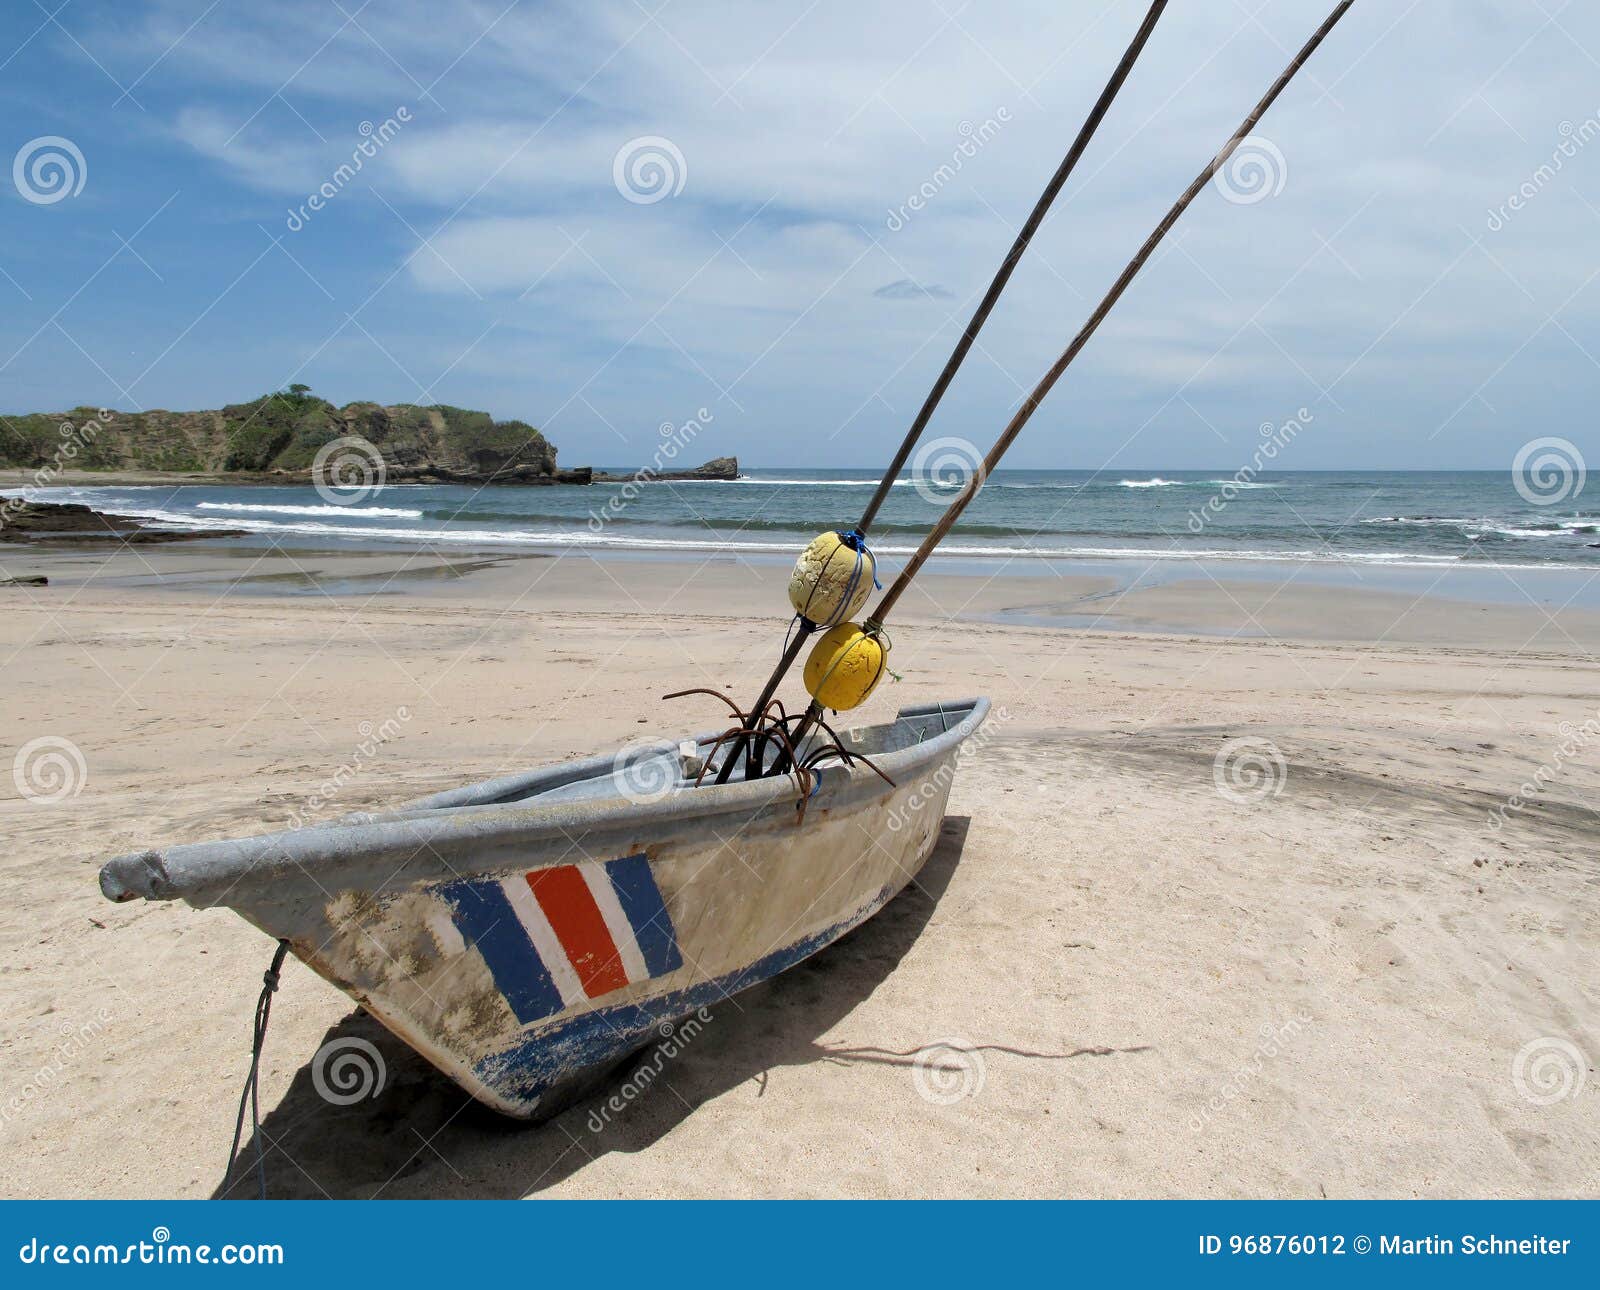 boat on tropical beach, playa garza, costa rica